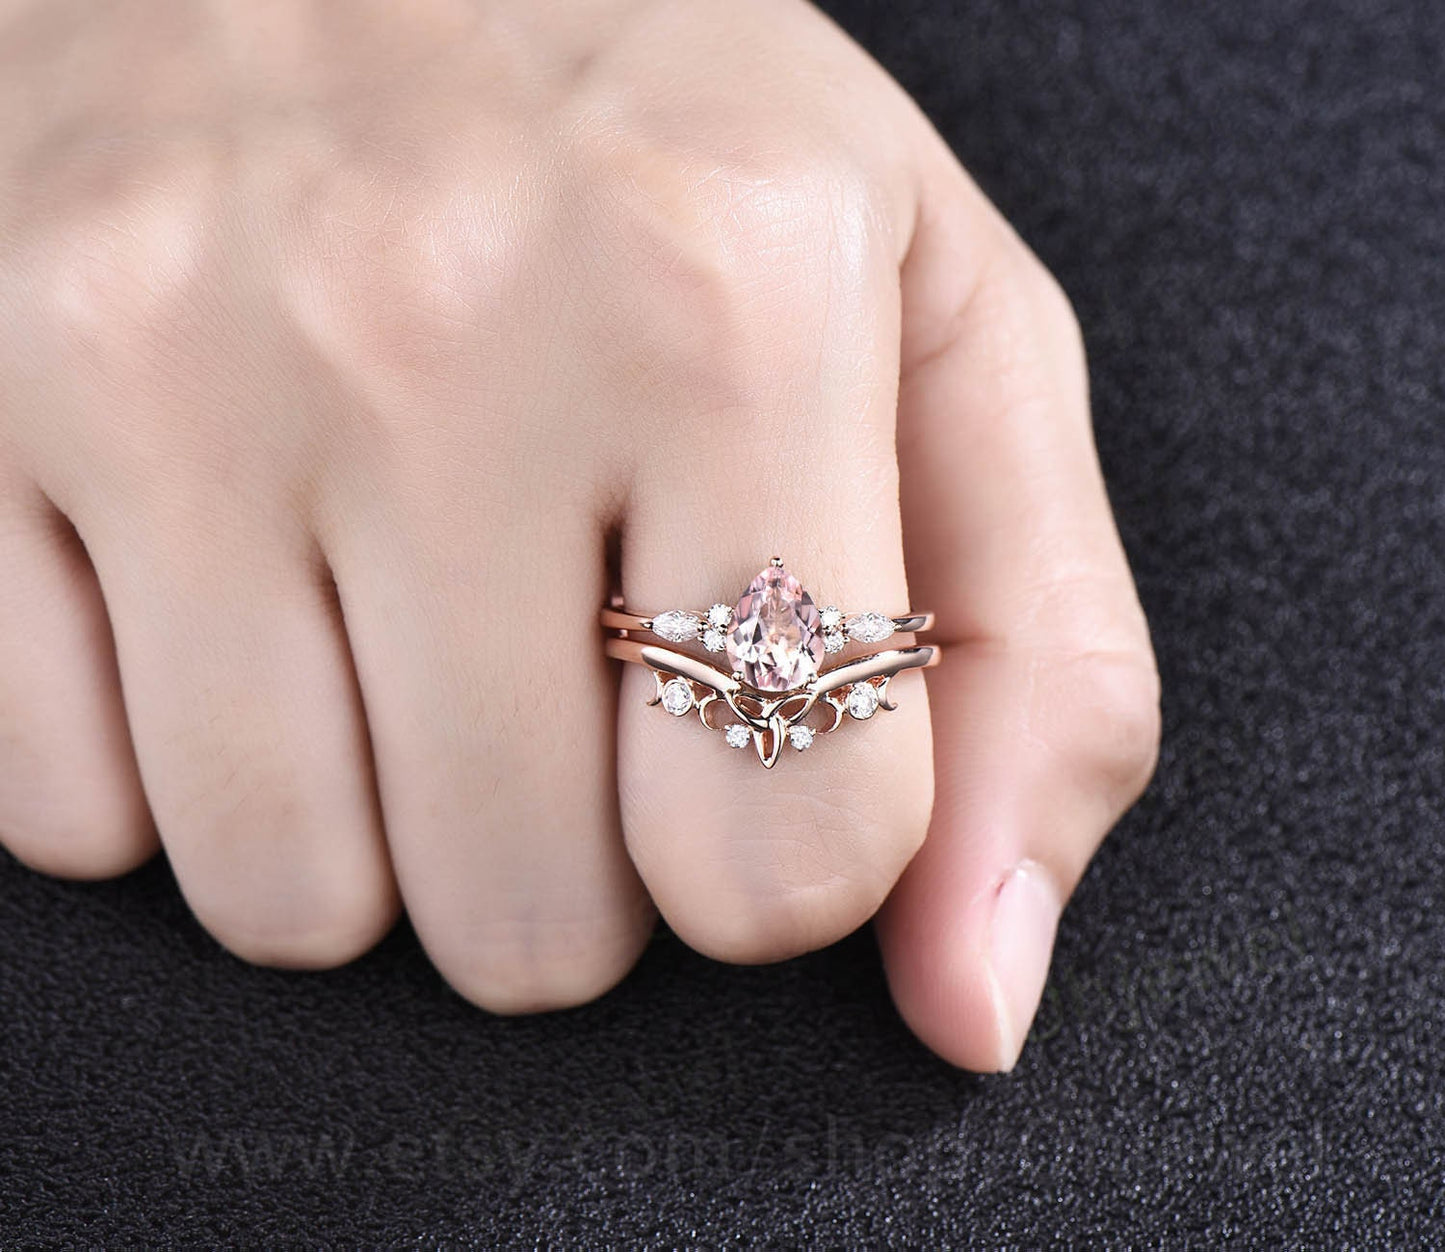 Unique vintage pear shaped morganite engagement ring set rose gold art deco marquise moissanite ring  Pink morganite ring wedding ring set